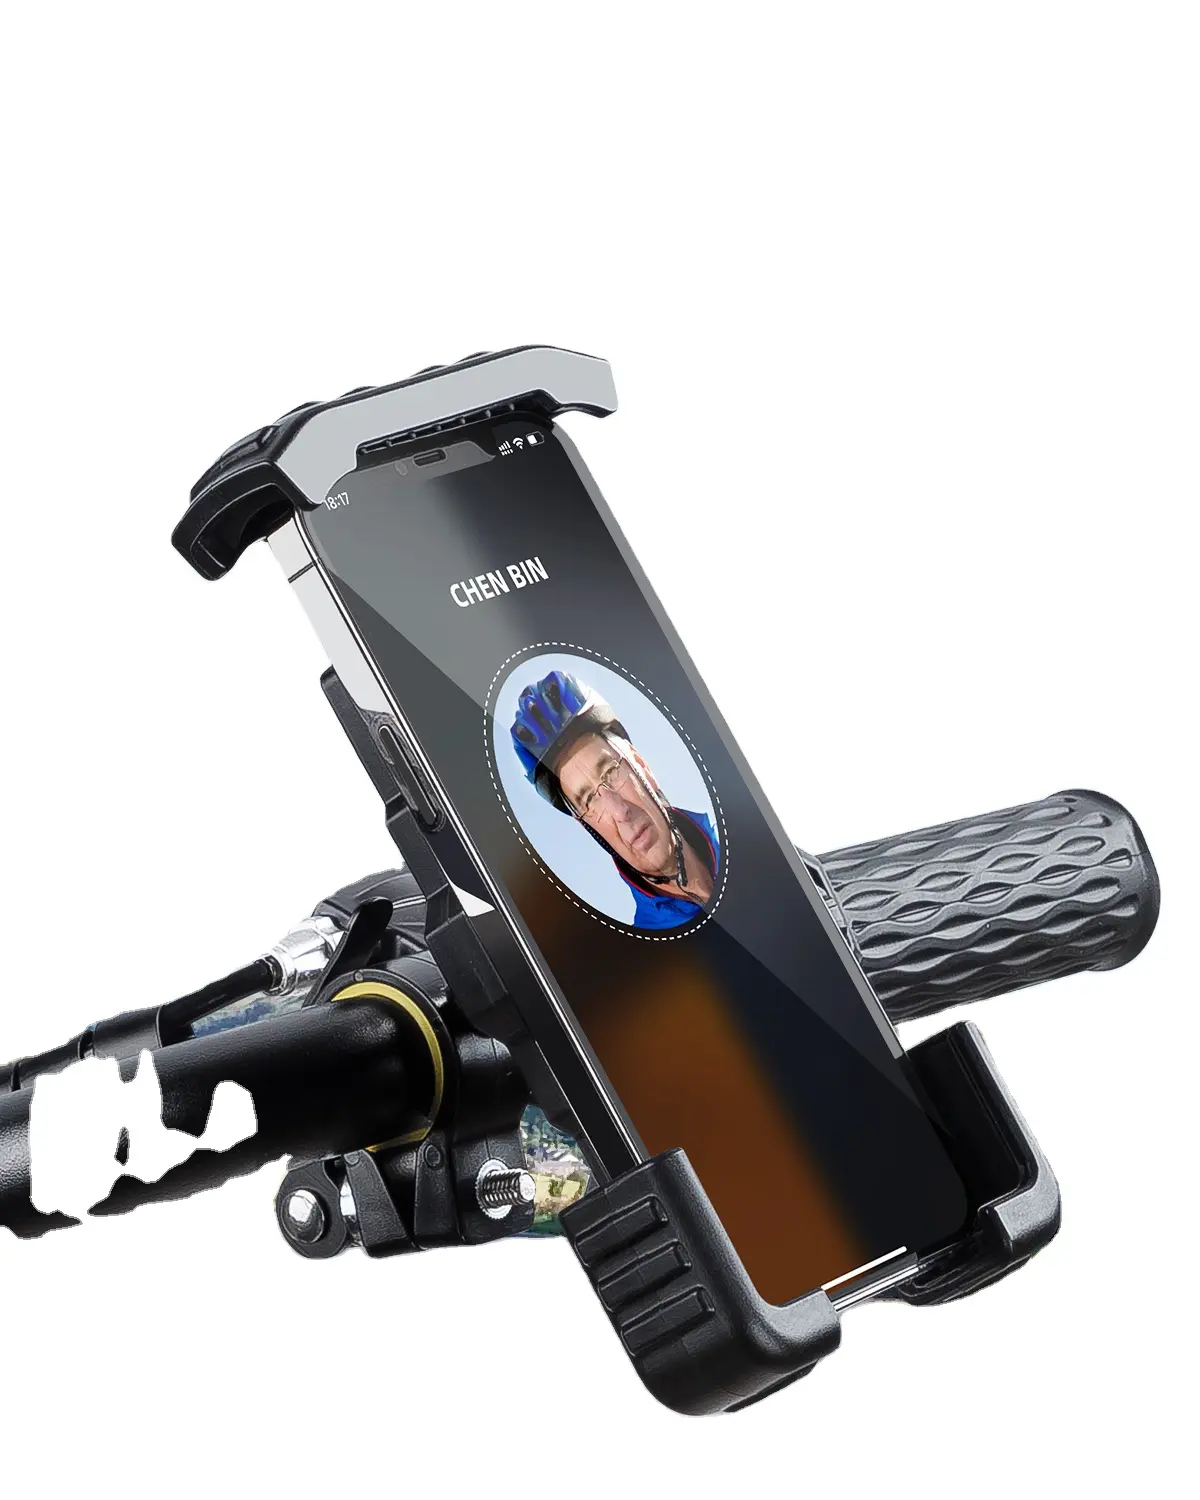 Universal Bike Phone Mount for Motorcycle - Bike Handlebars, Adjustable, Fits All iPhone's, 12, 11, X, iPhone 8, 8 Plus, All Sam